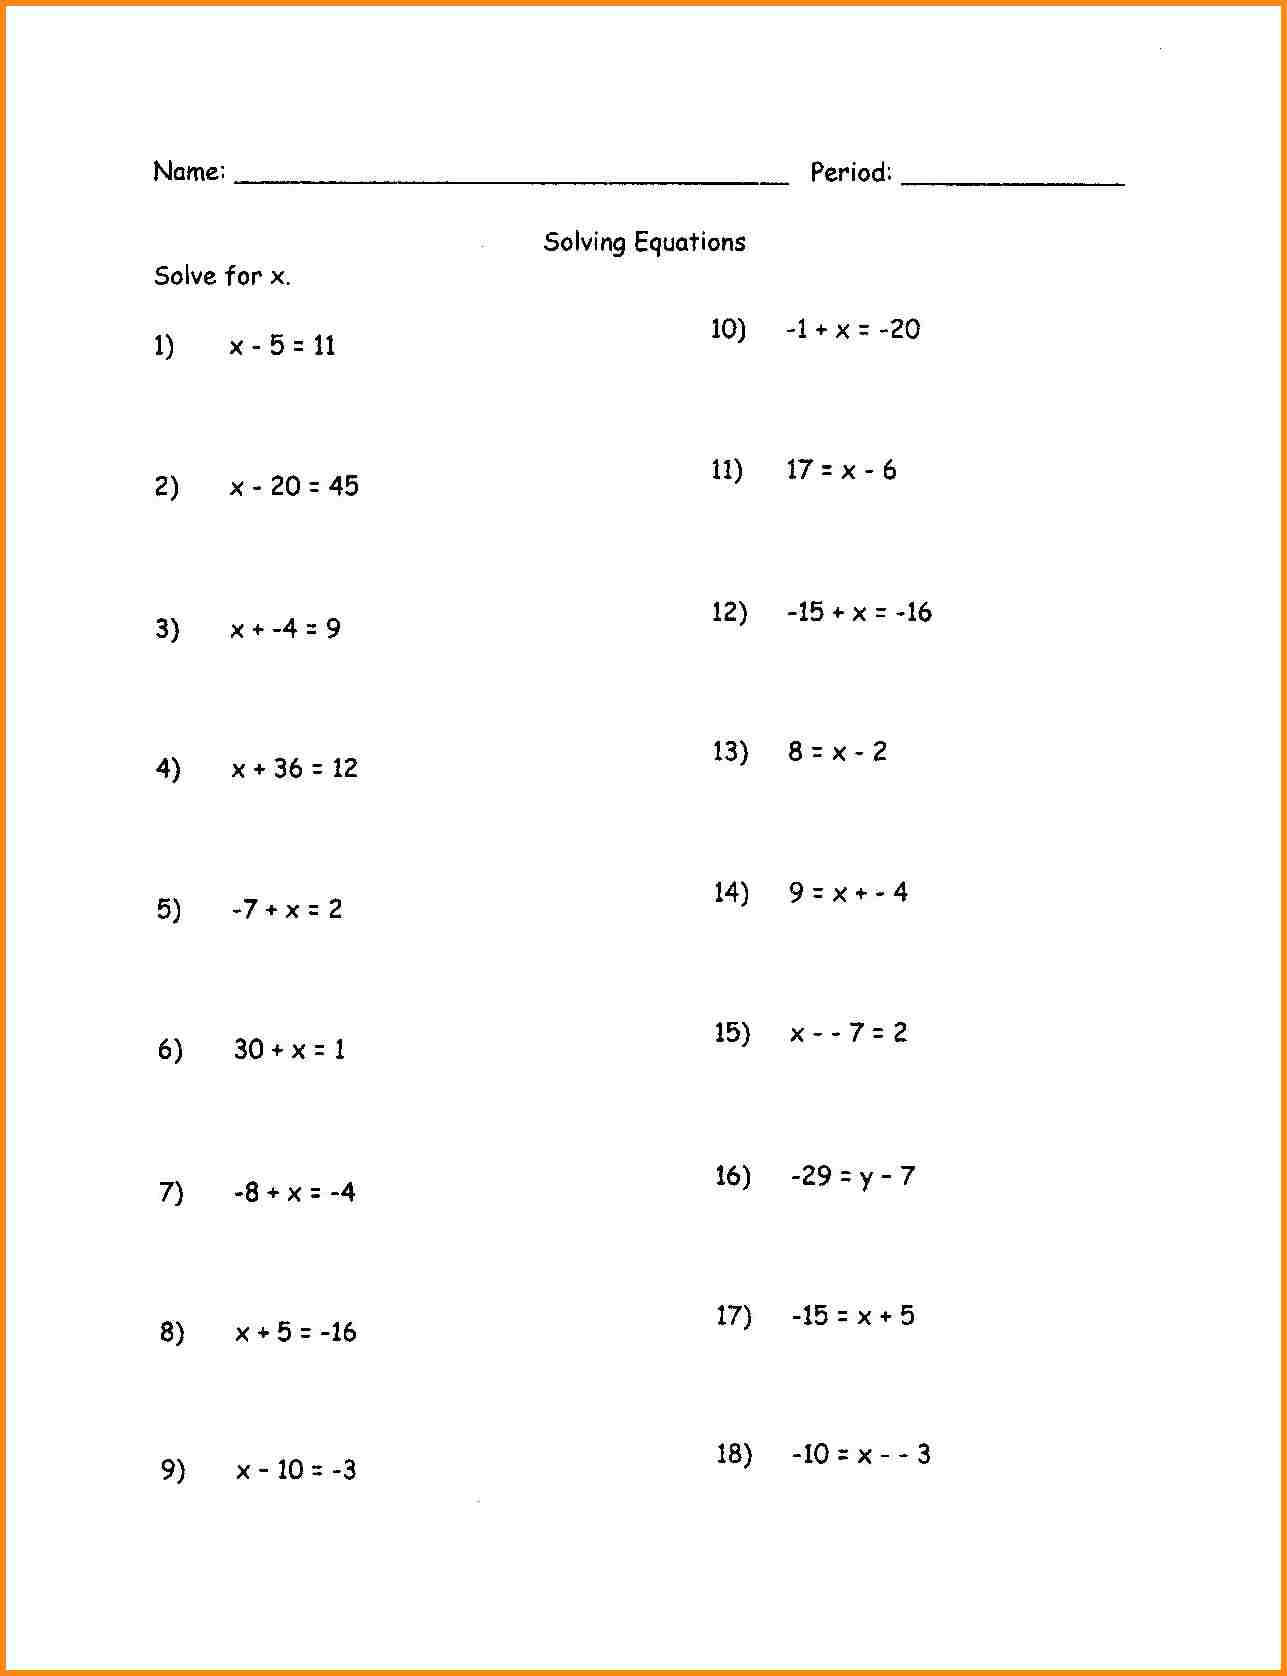 Solving Equations Problems Worksheet Algebra